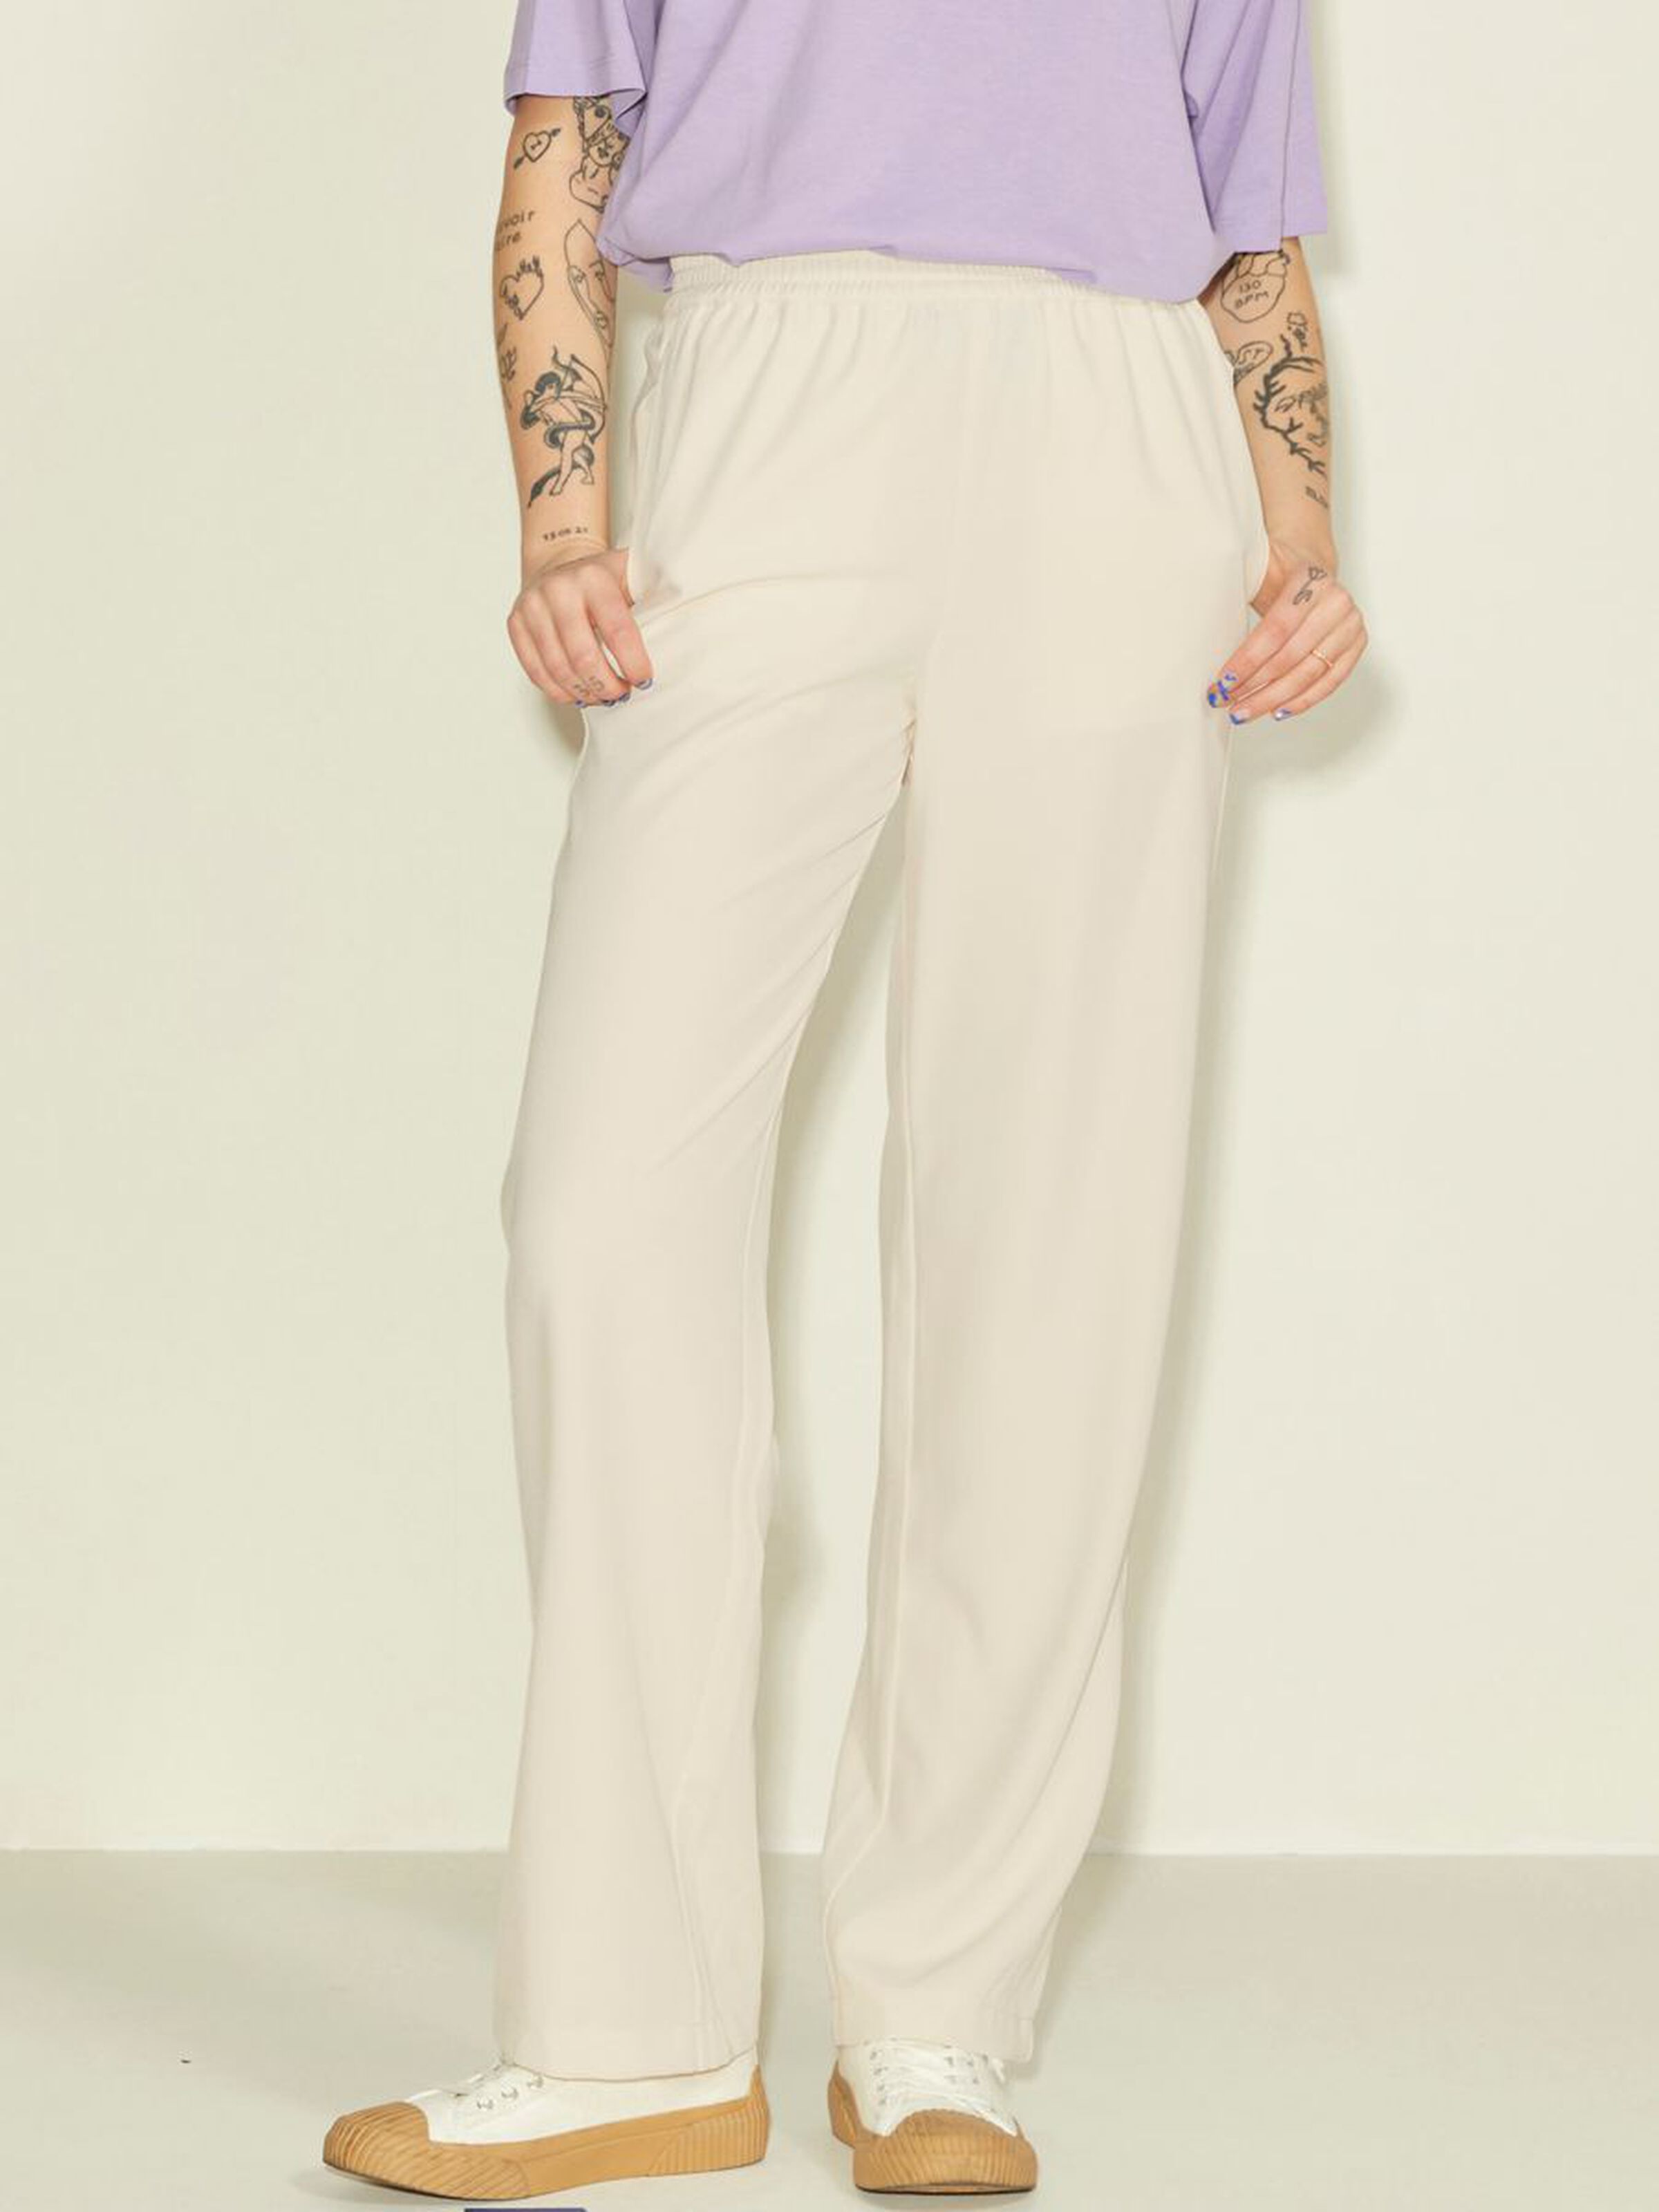 Jxalva regular string trousers - white/vanilla ice